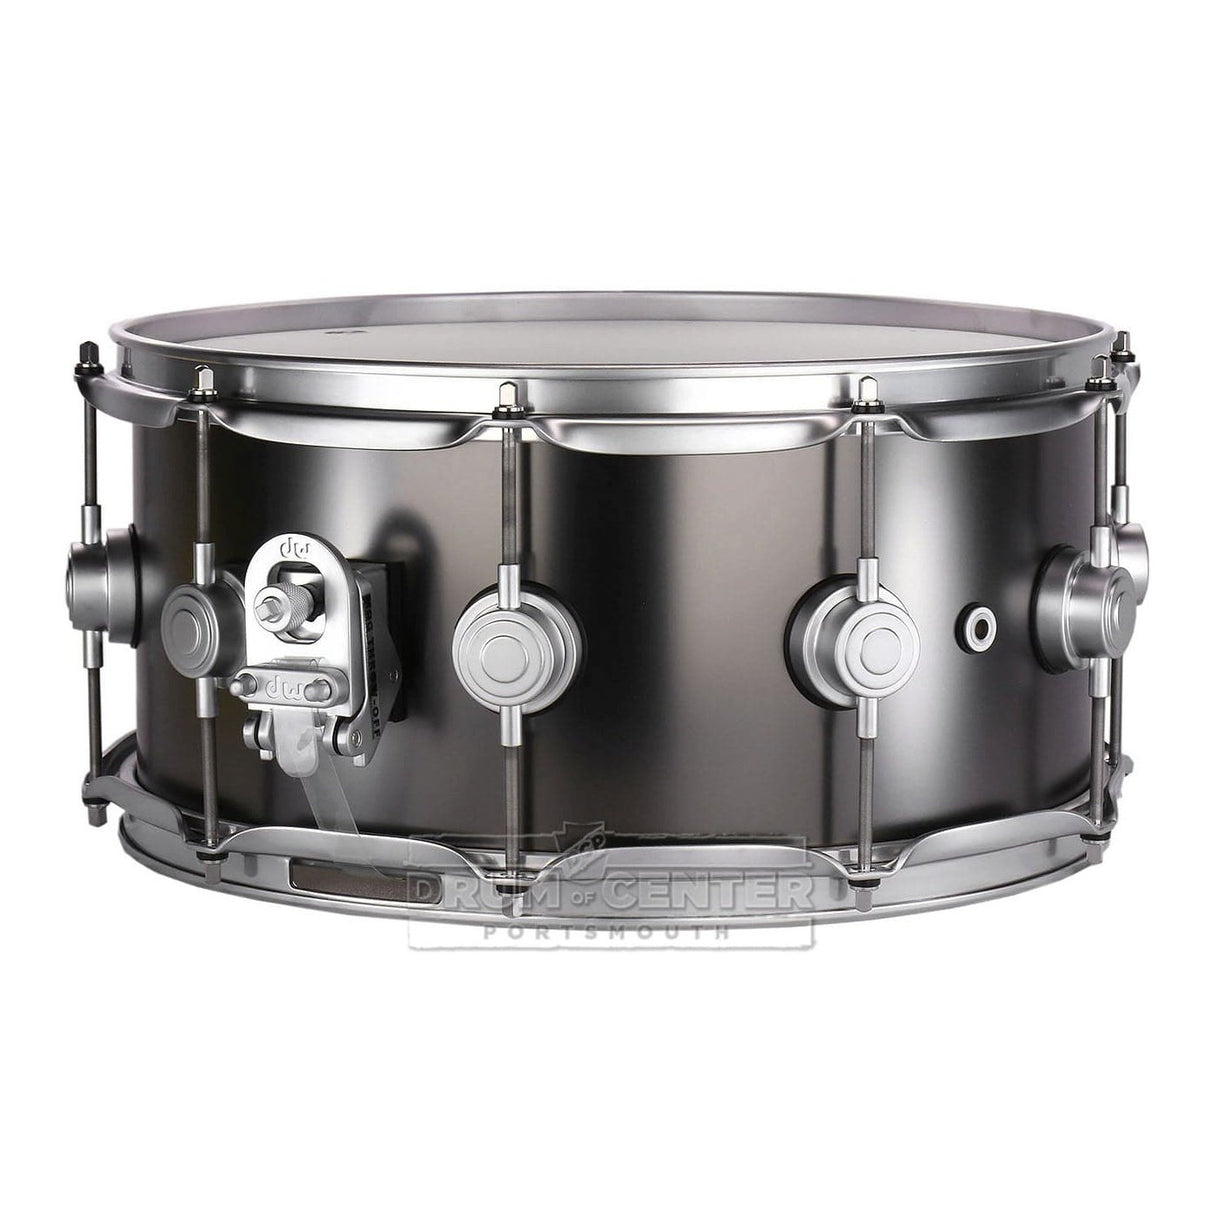 DW Collectors Series Satin Black Brass Snare Drum - 14x6.5 - Satin Chrome Hardware